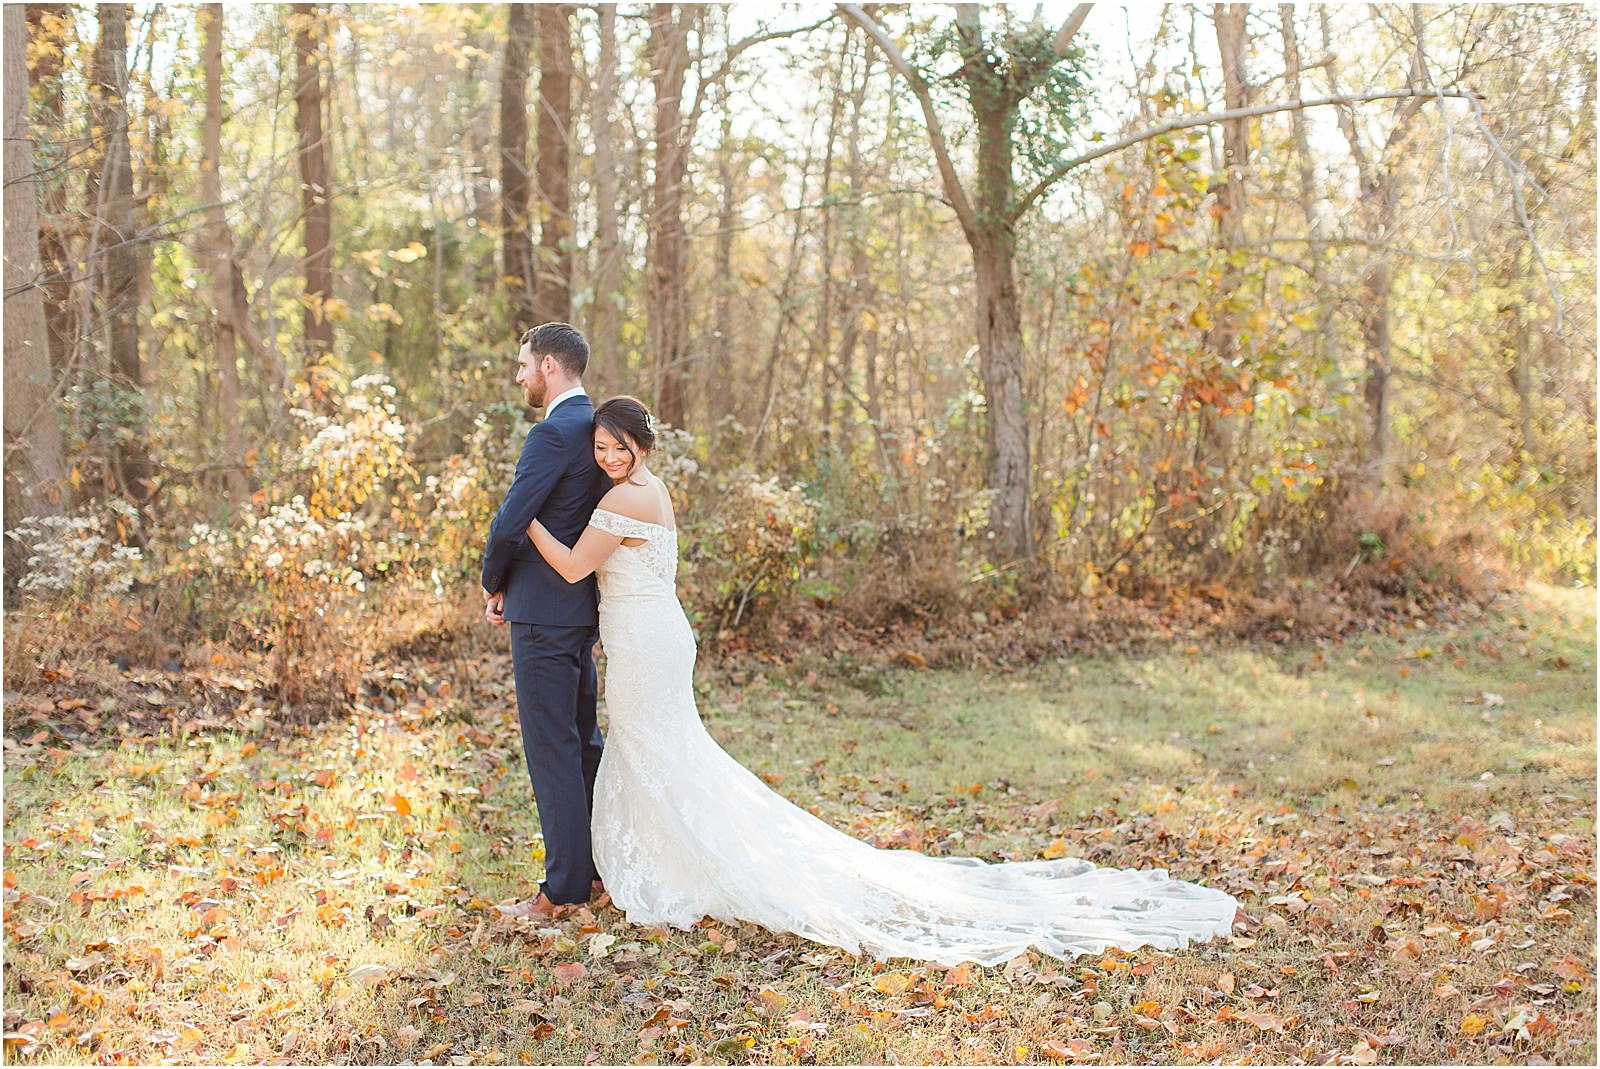 Walker and Alyssa's intimate fall wedding in Southern Indiana. | Wedding Photography | The Corner House Wedding | Southern Indiana Wedding | #fallwedding #intimatewedding | 023.jpg